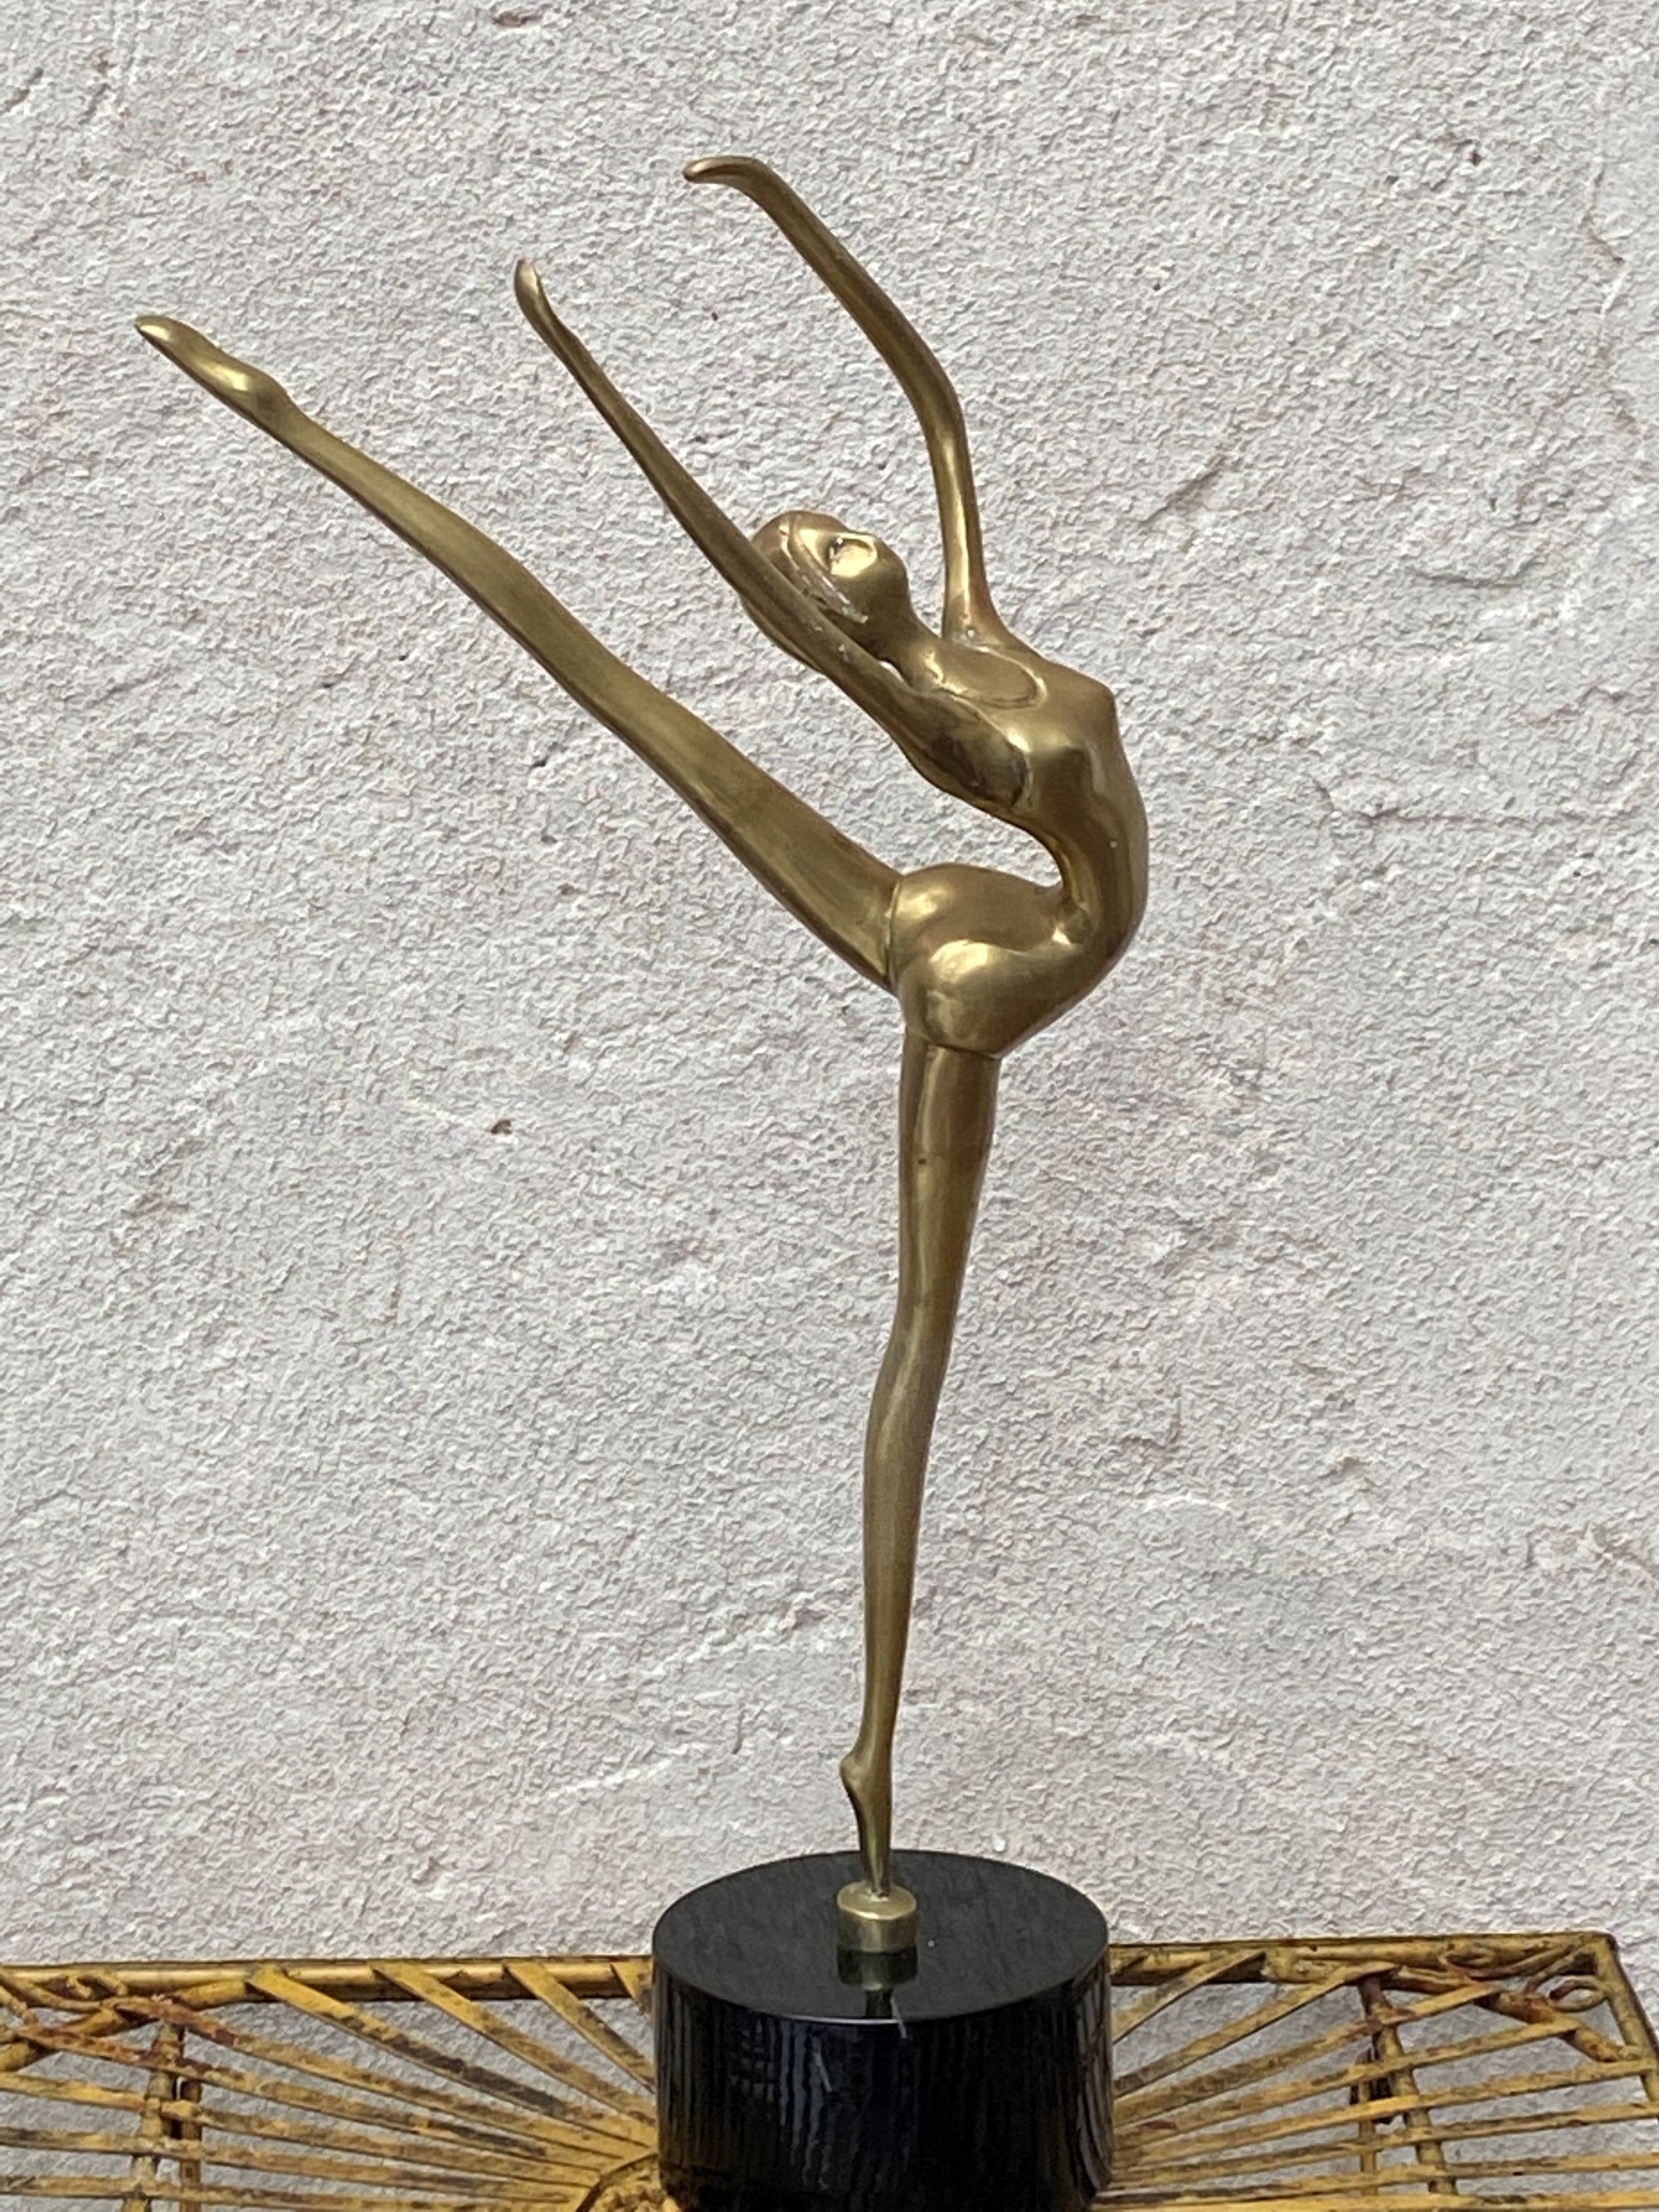 I Like Mike's Mid Century Modern Figurines Mid Century Brass Ballerina Table Sculpture